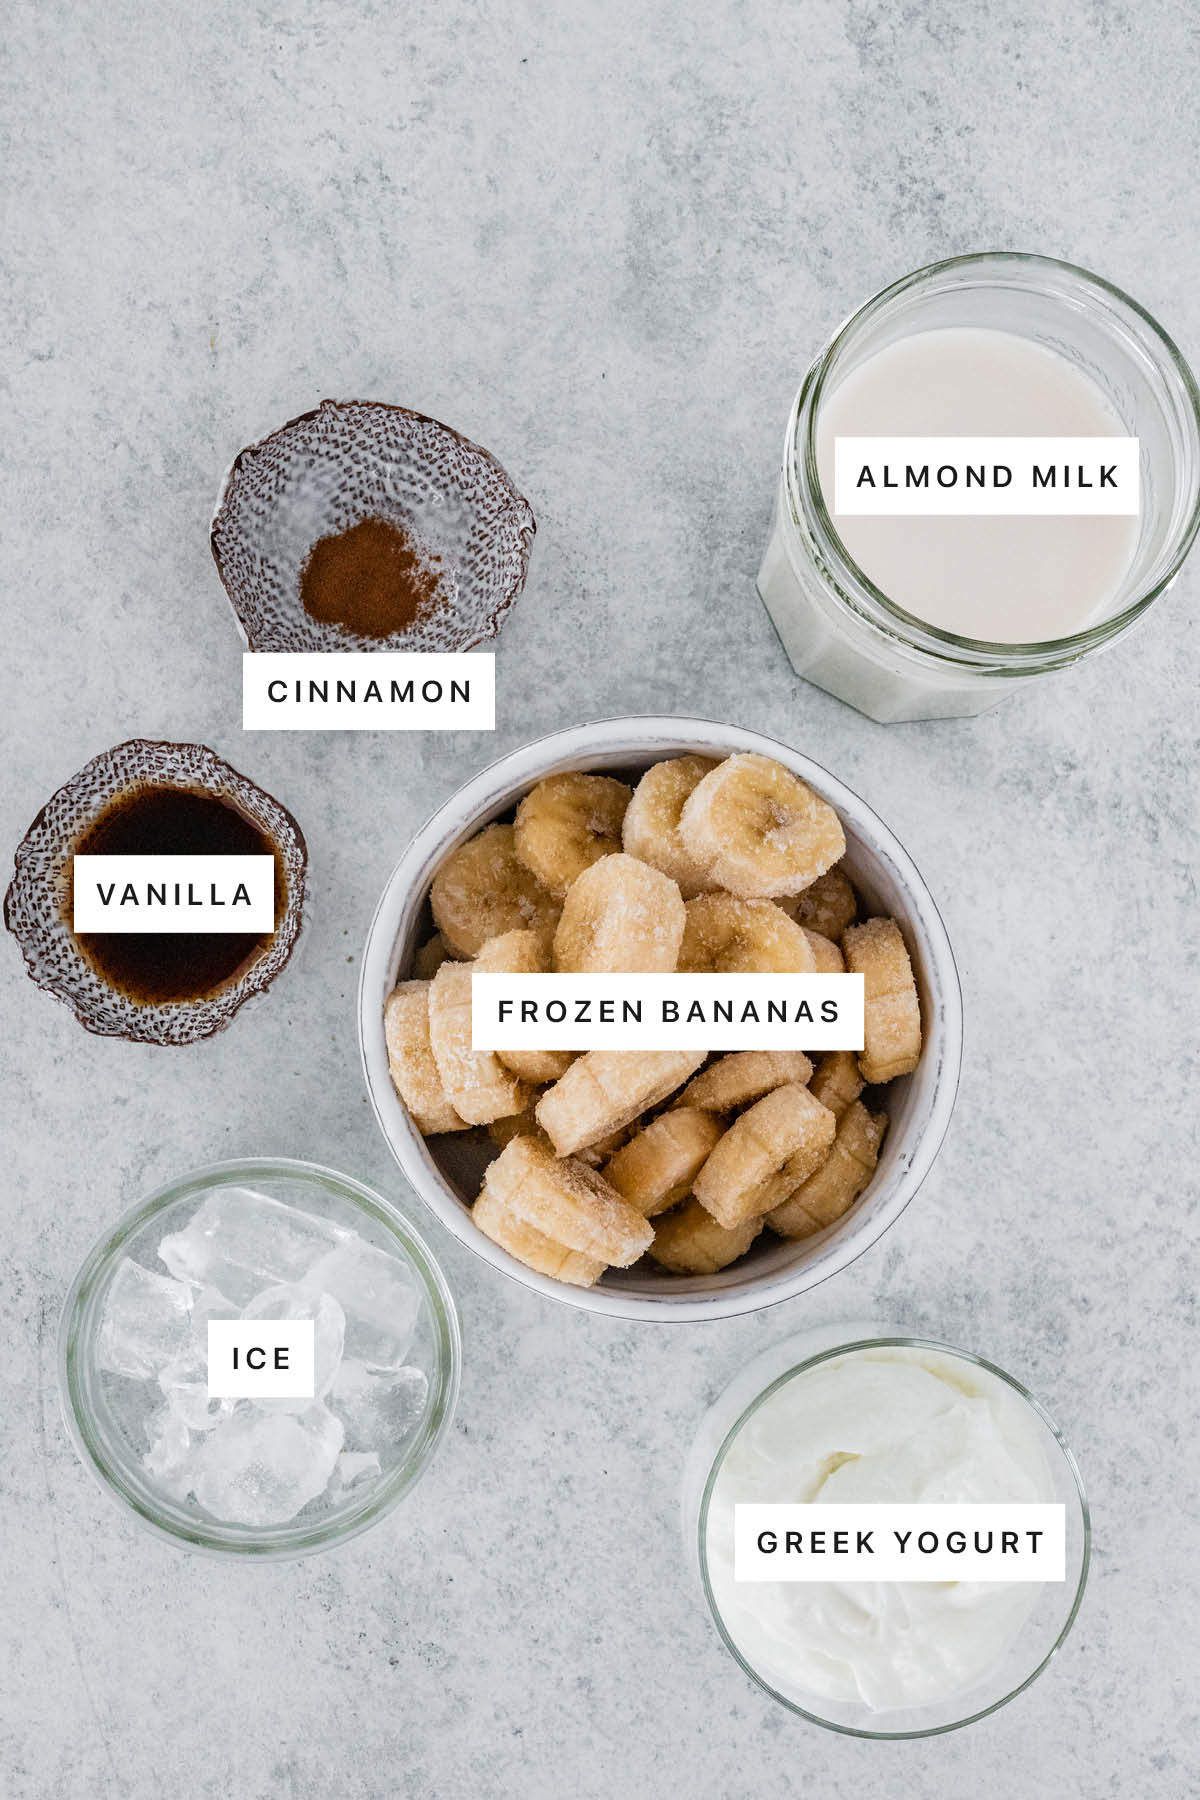 Measured ingredients to make a banana smoothie: cinnamon, vanilla almond milk, frozen bananas, ice, and Greek yogurt.